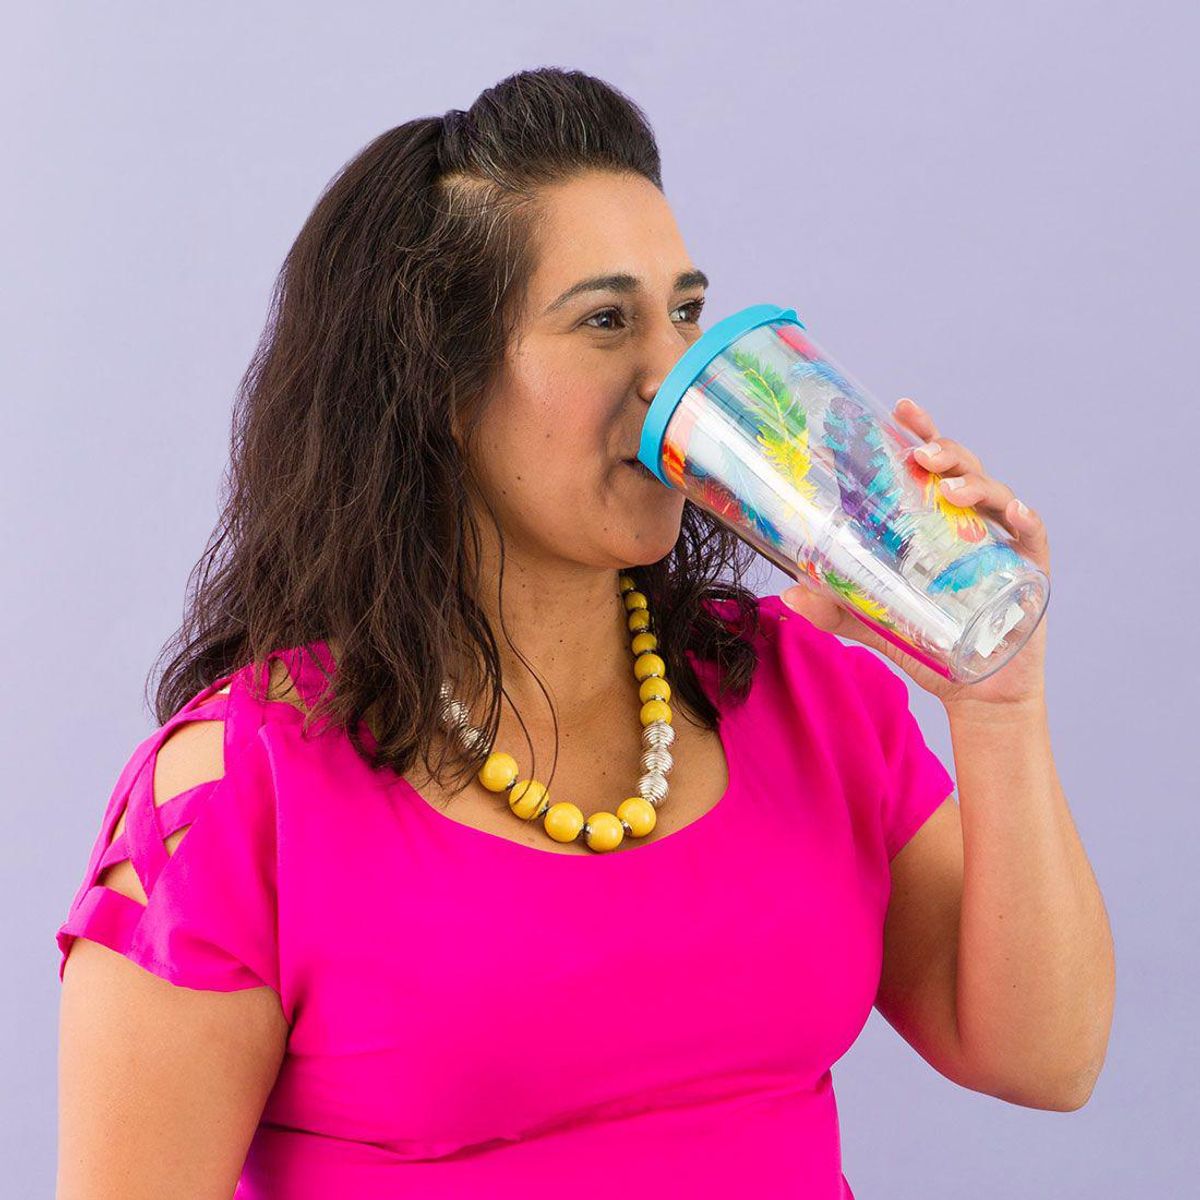 tips for avoiding dehydration